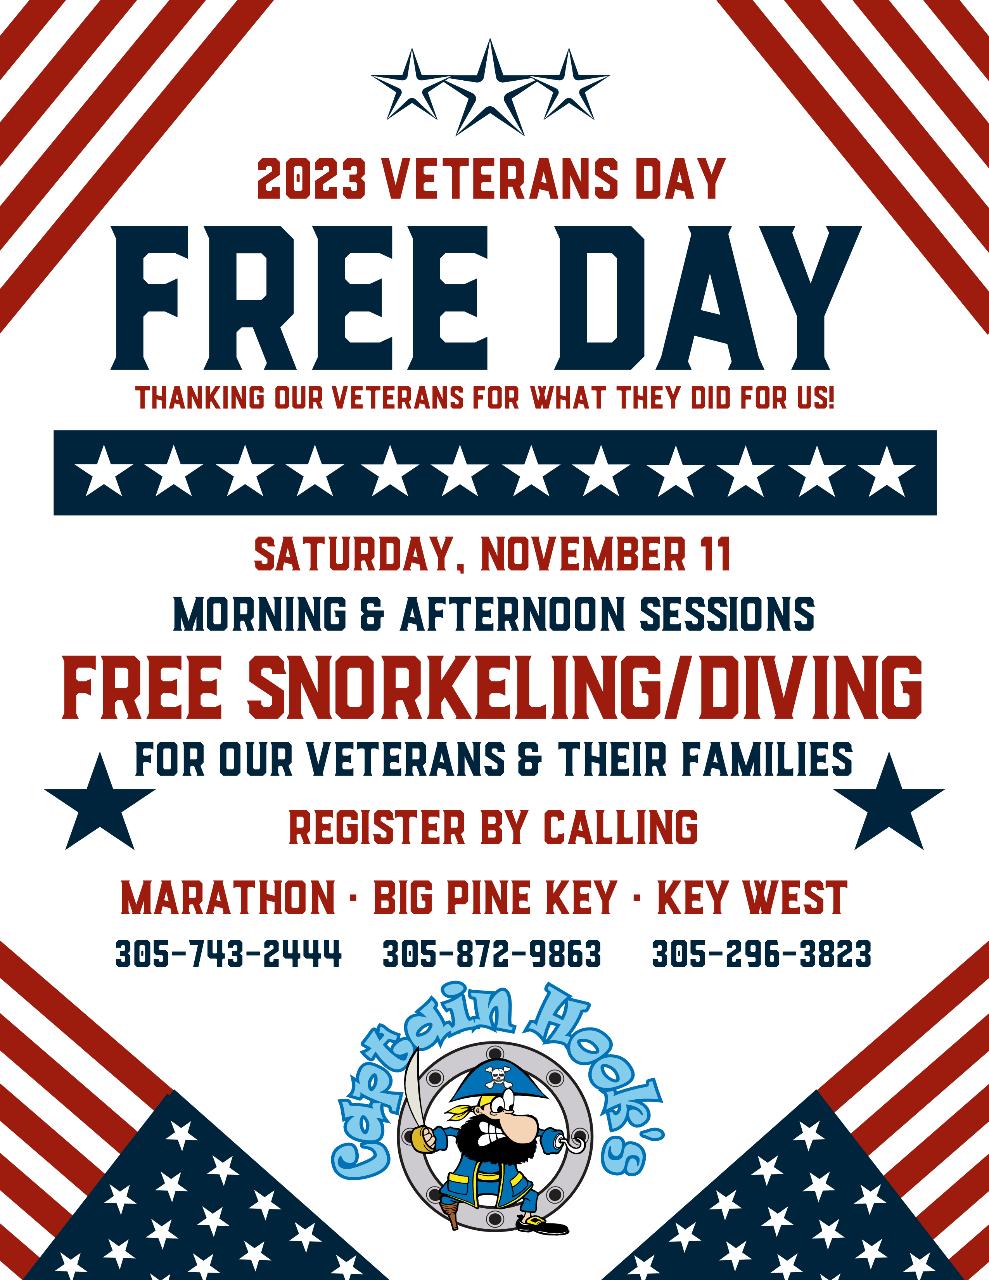 Veterans Day Free Day Snorkel - Big Pine Key